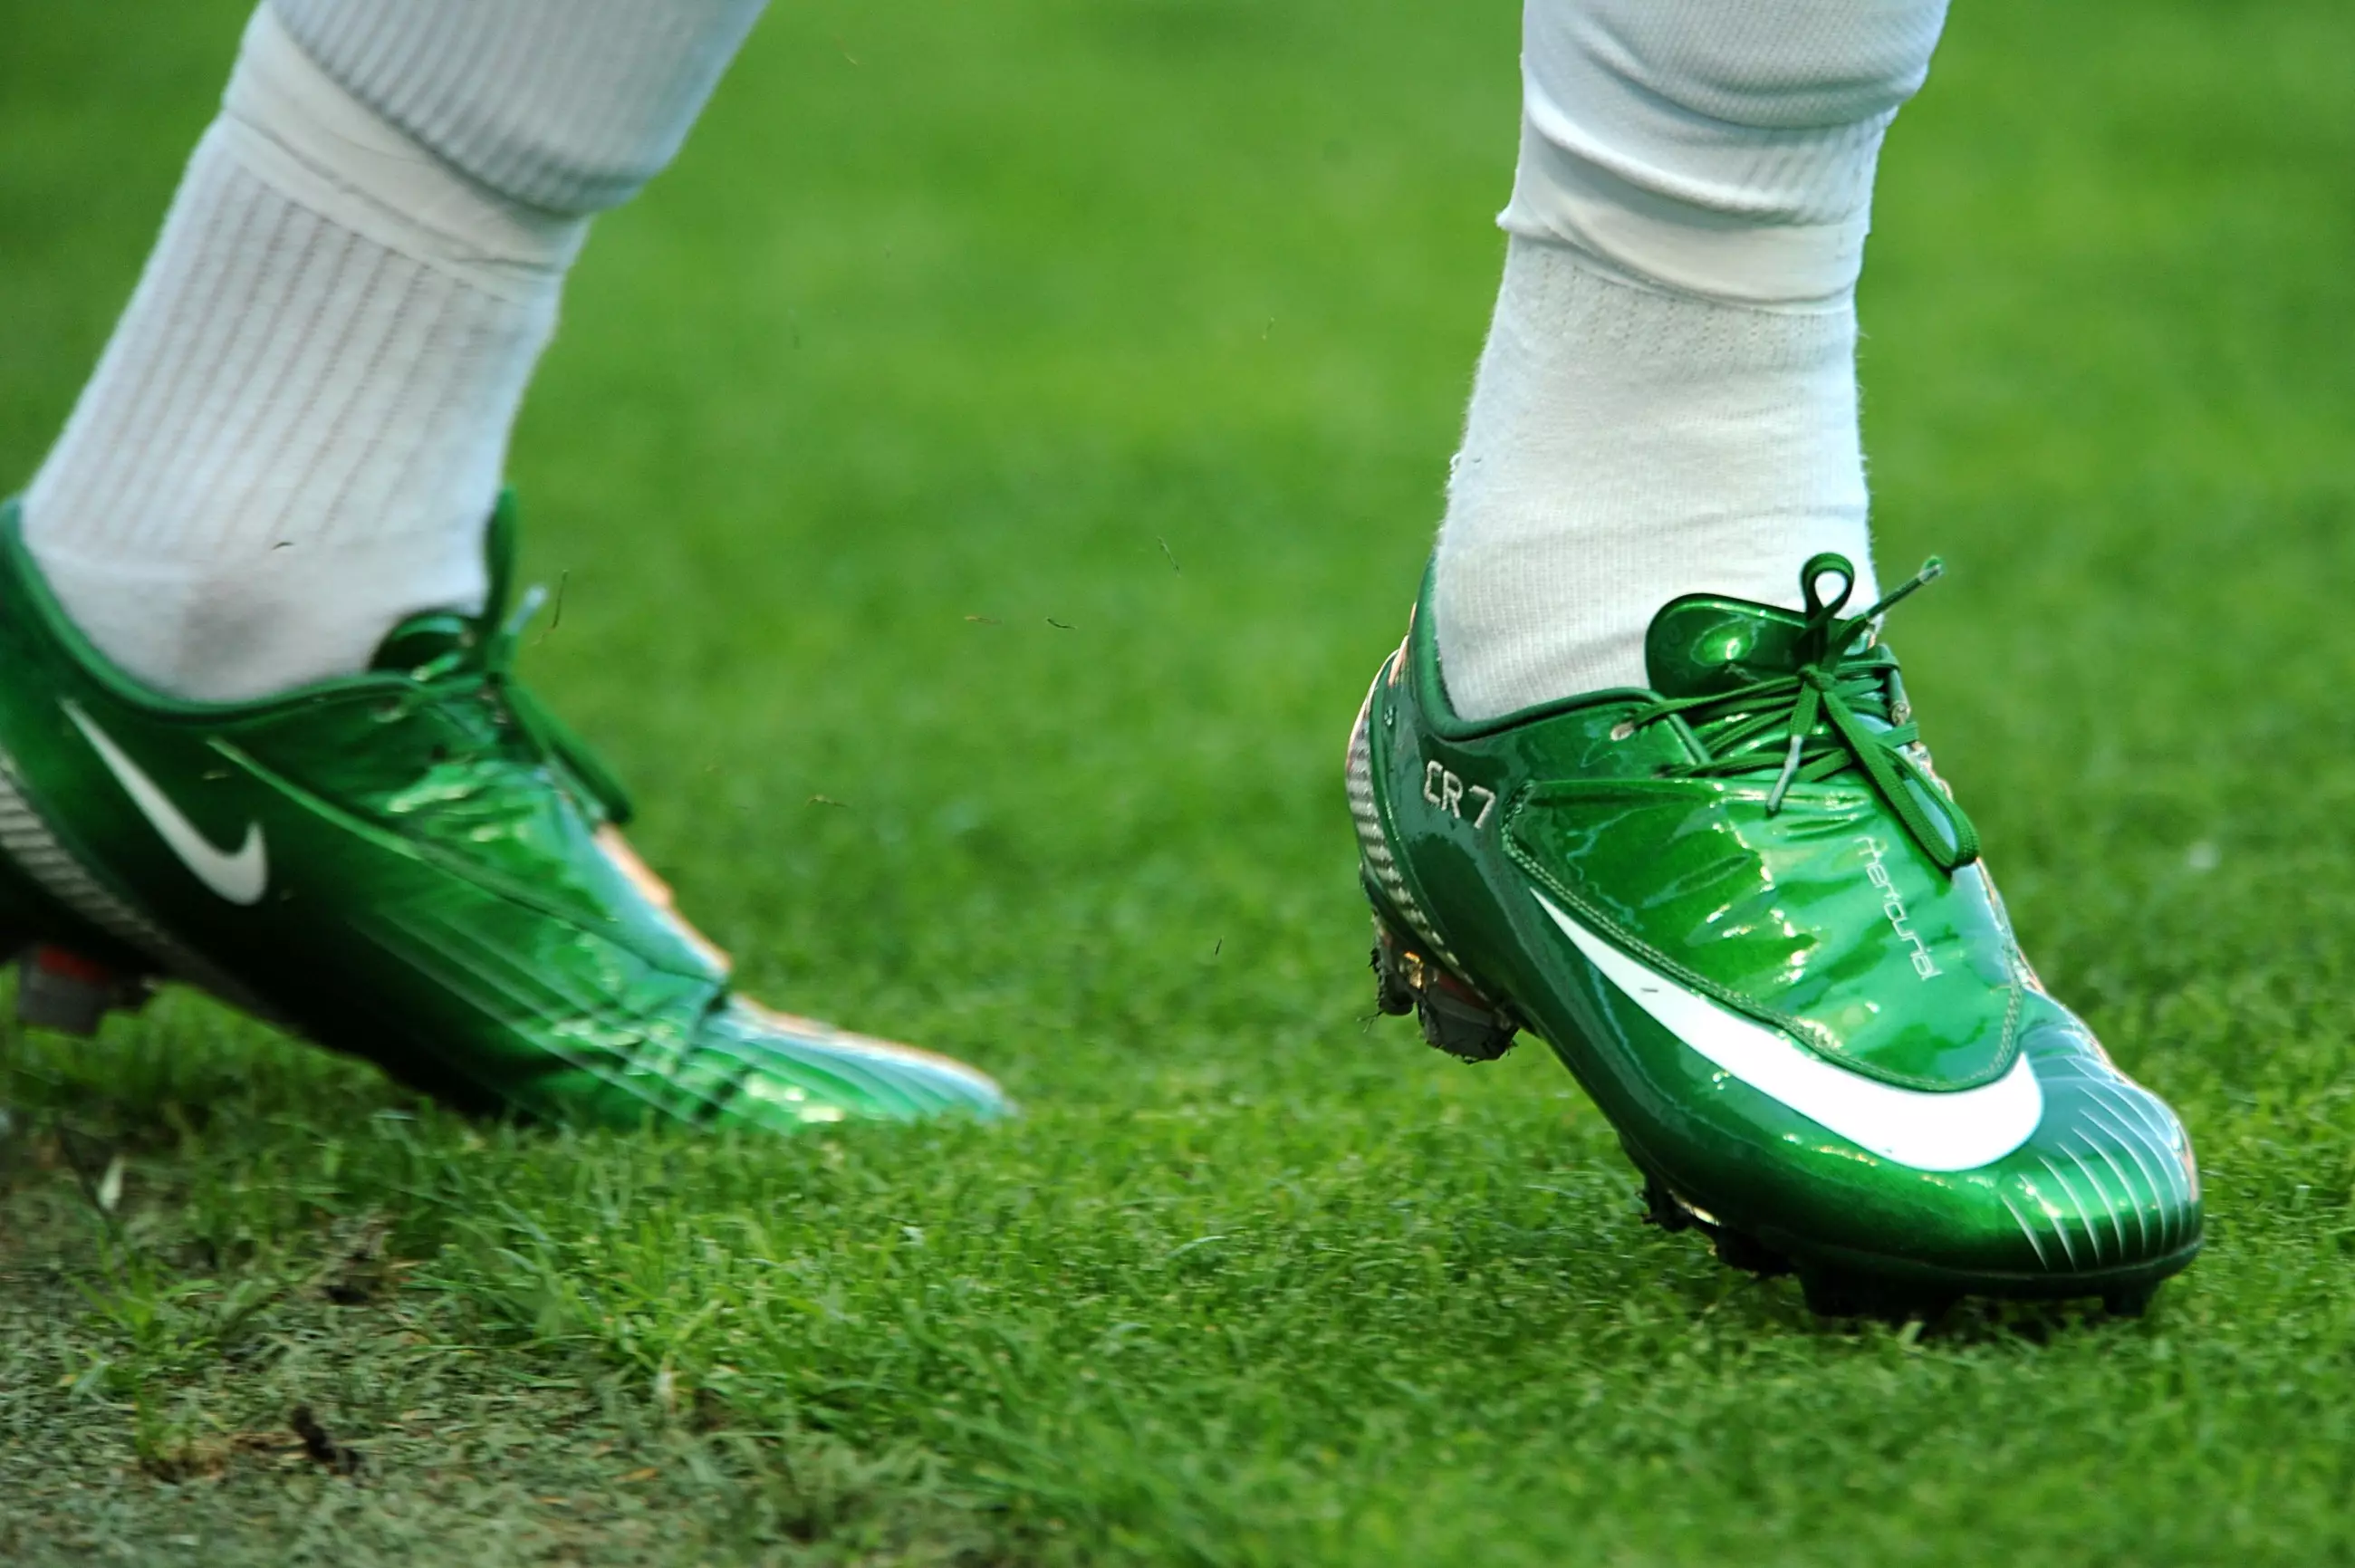 Ronaldo's green Nike boots. Image: PA